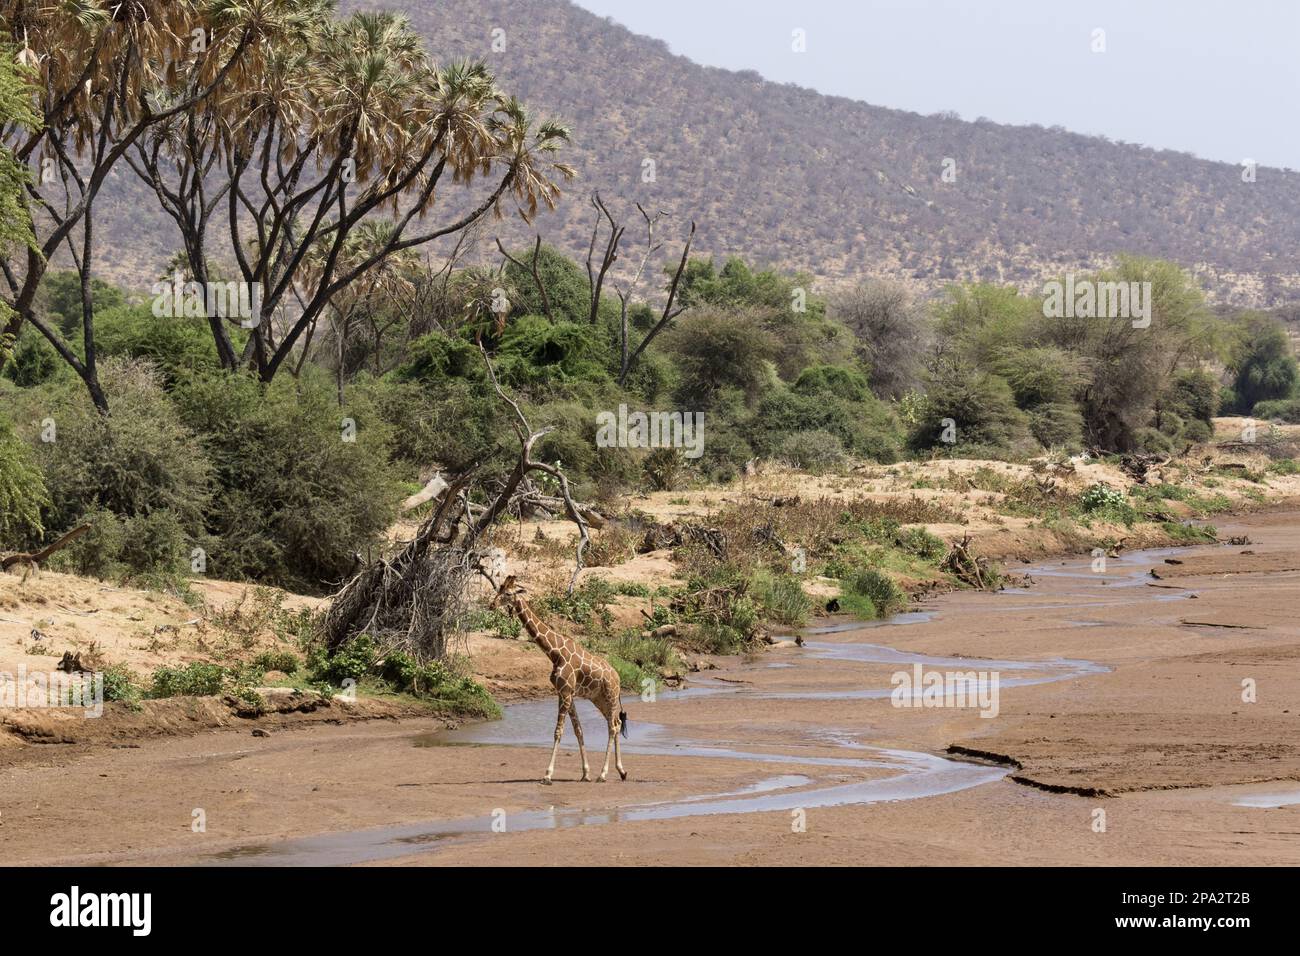 Jirafa reticulada adulta (Giraffa camelopardalis reticulata), caminando en el lecho de un río casi seco en un hábitat de sabana seca semi-desértico Foto de stock